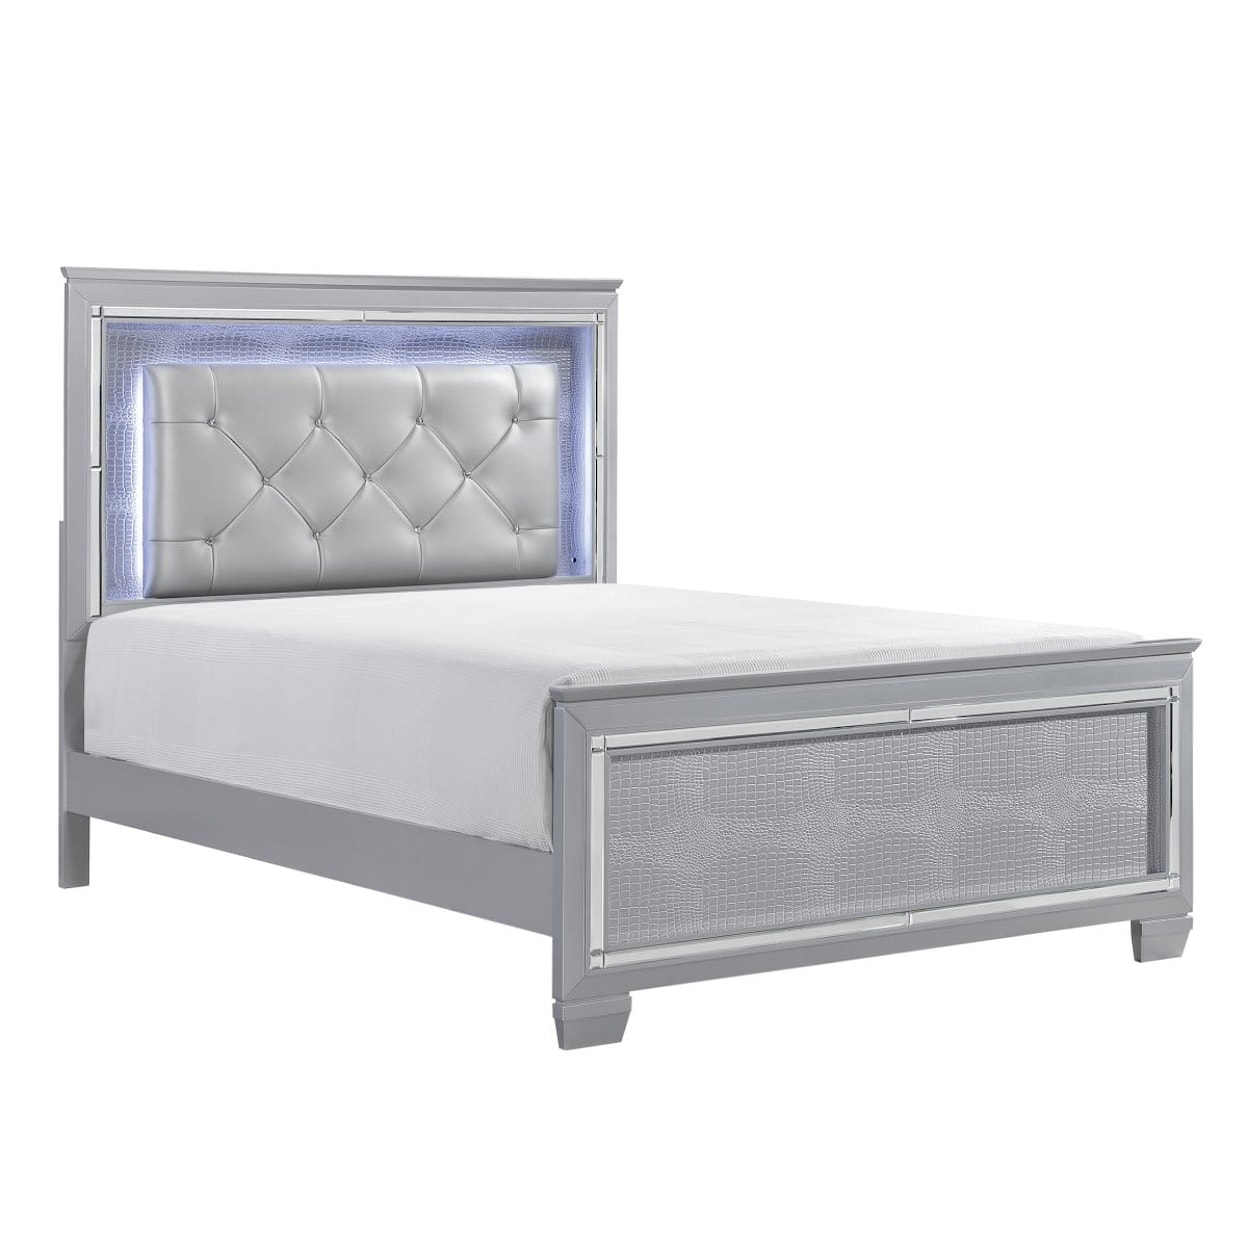 Homelegance Furniture Allura Full Panel Bed with LED Lights